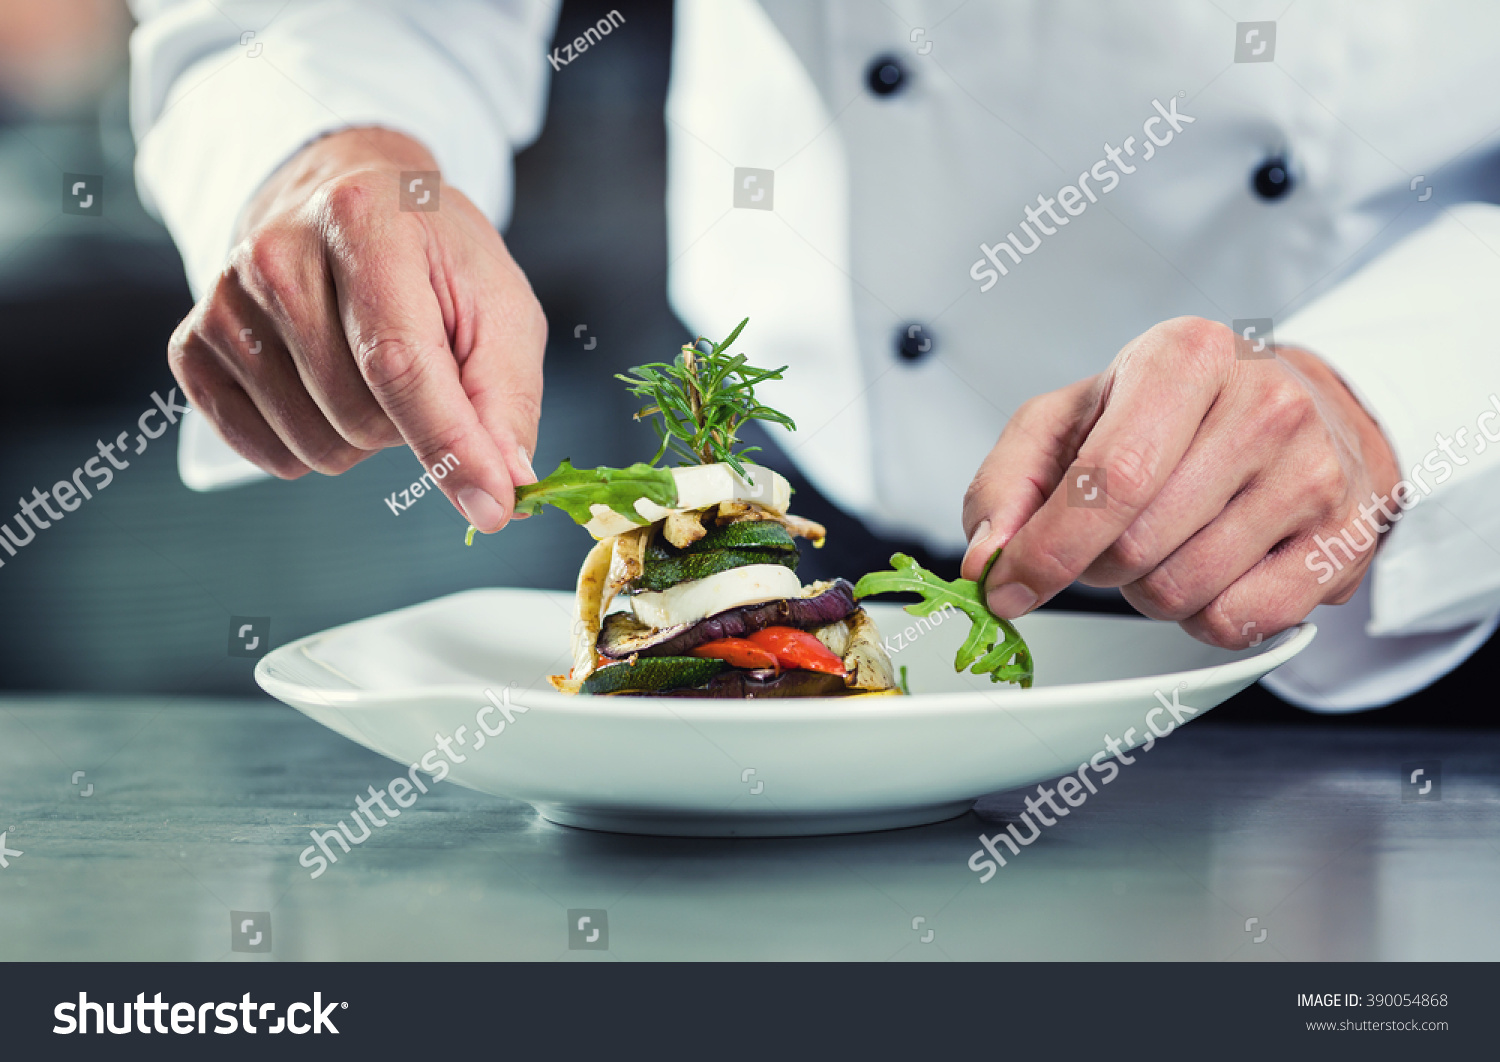 Chef in Restaurant garnishing vegetable dish, crop on hands, filtered image #390054868